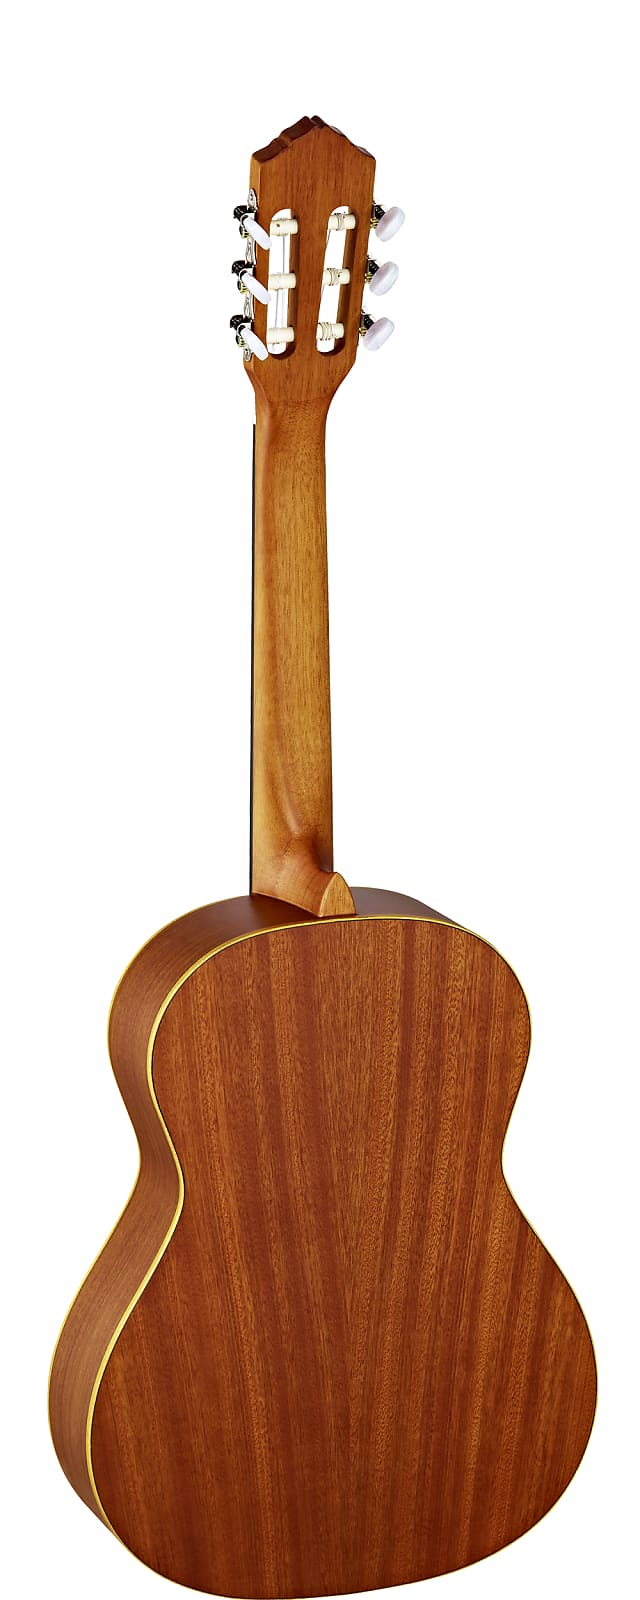 Ortega Family Series 3/4 Size Cedar Top Nylon Acoustic Guitar R122-3/4 w/GigBag